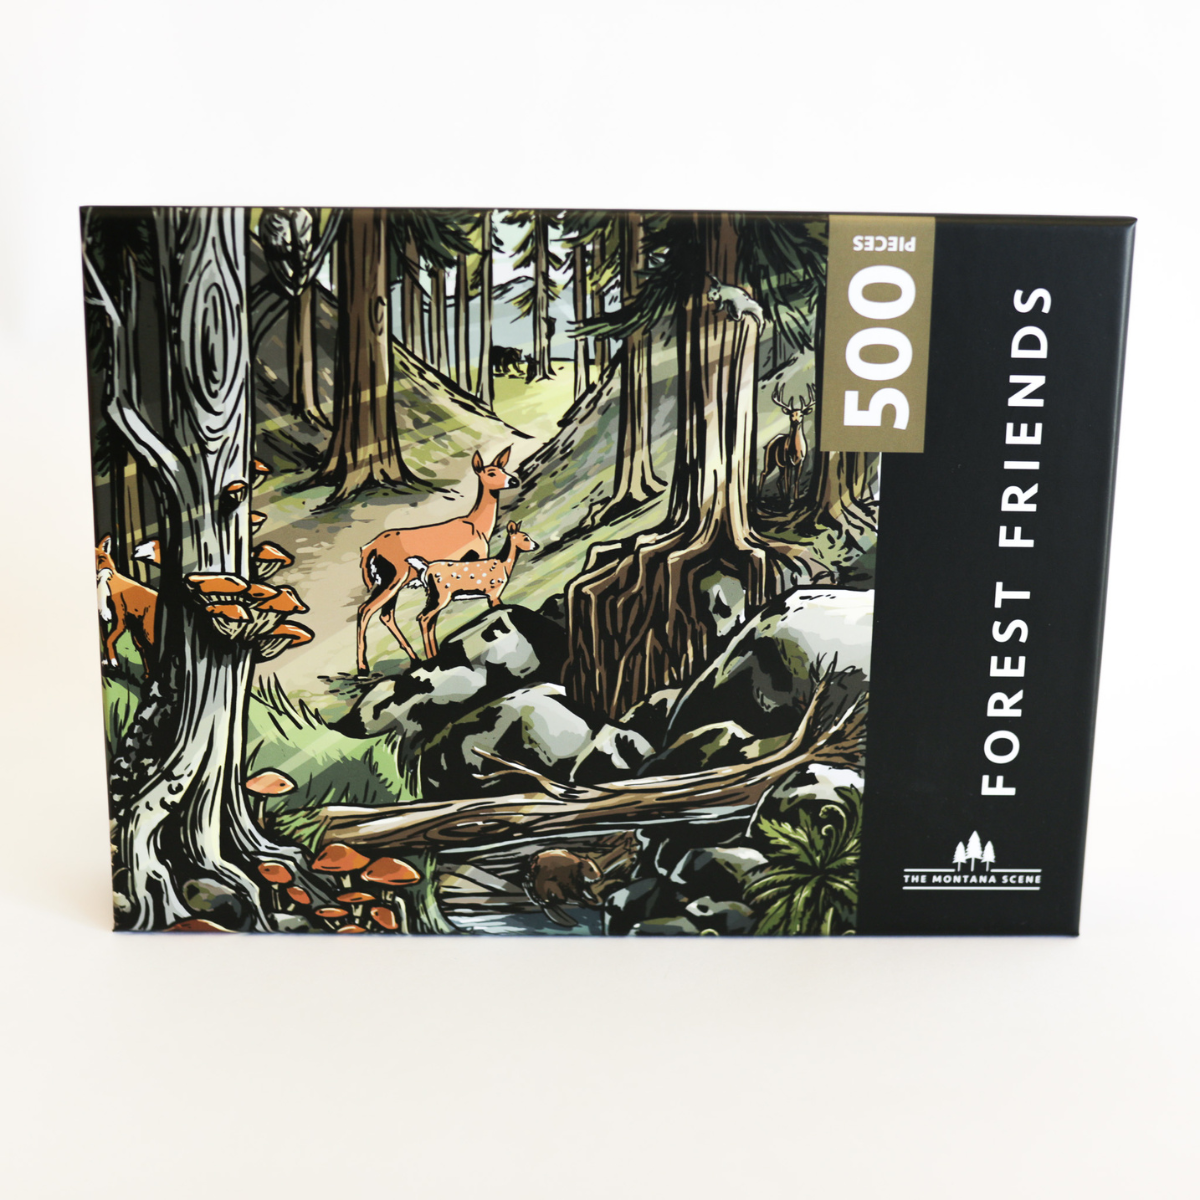 Forest Friends | 500 Piece Jigsaw Puzzle